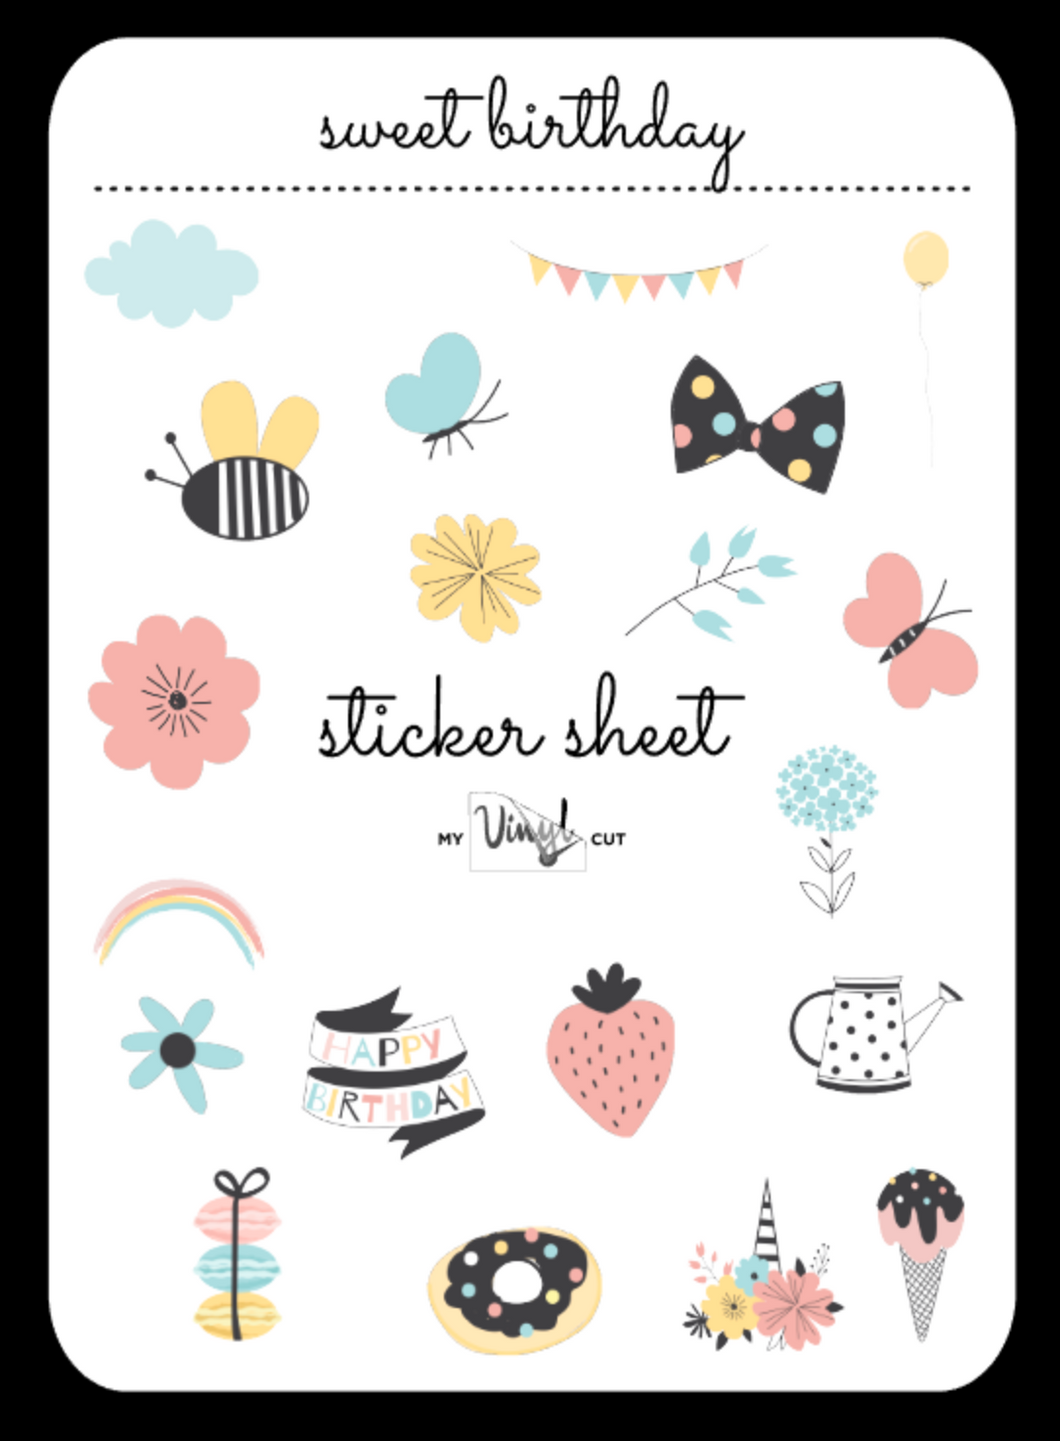 Little Stickers Sheet